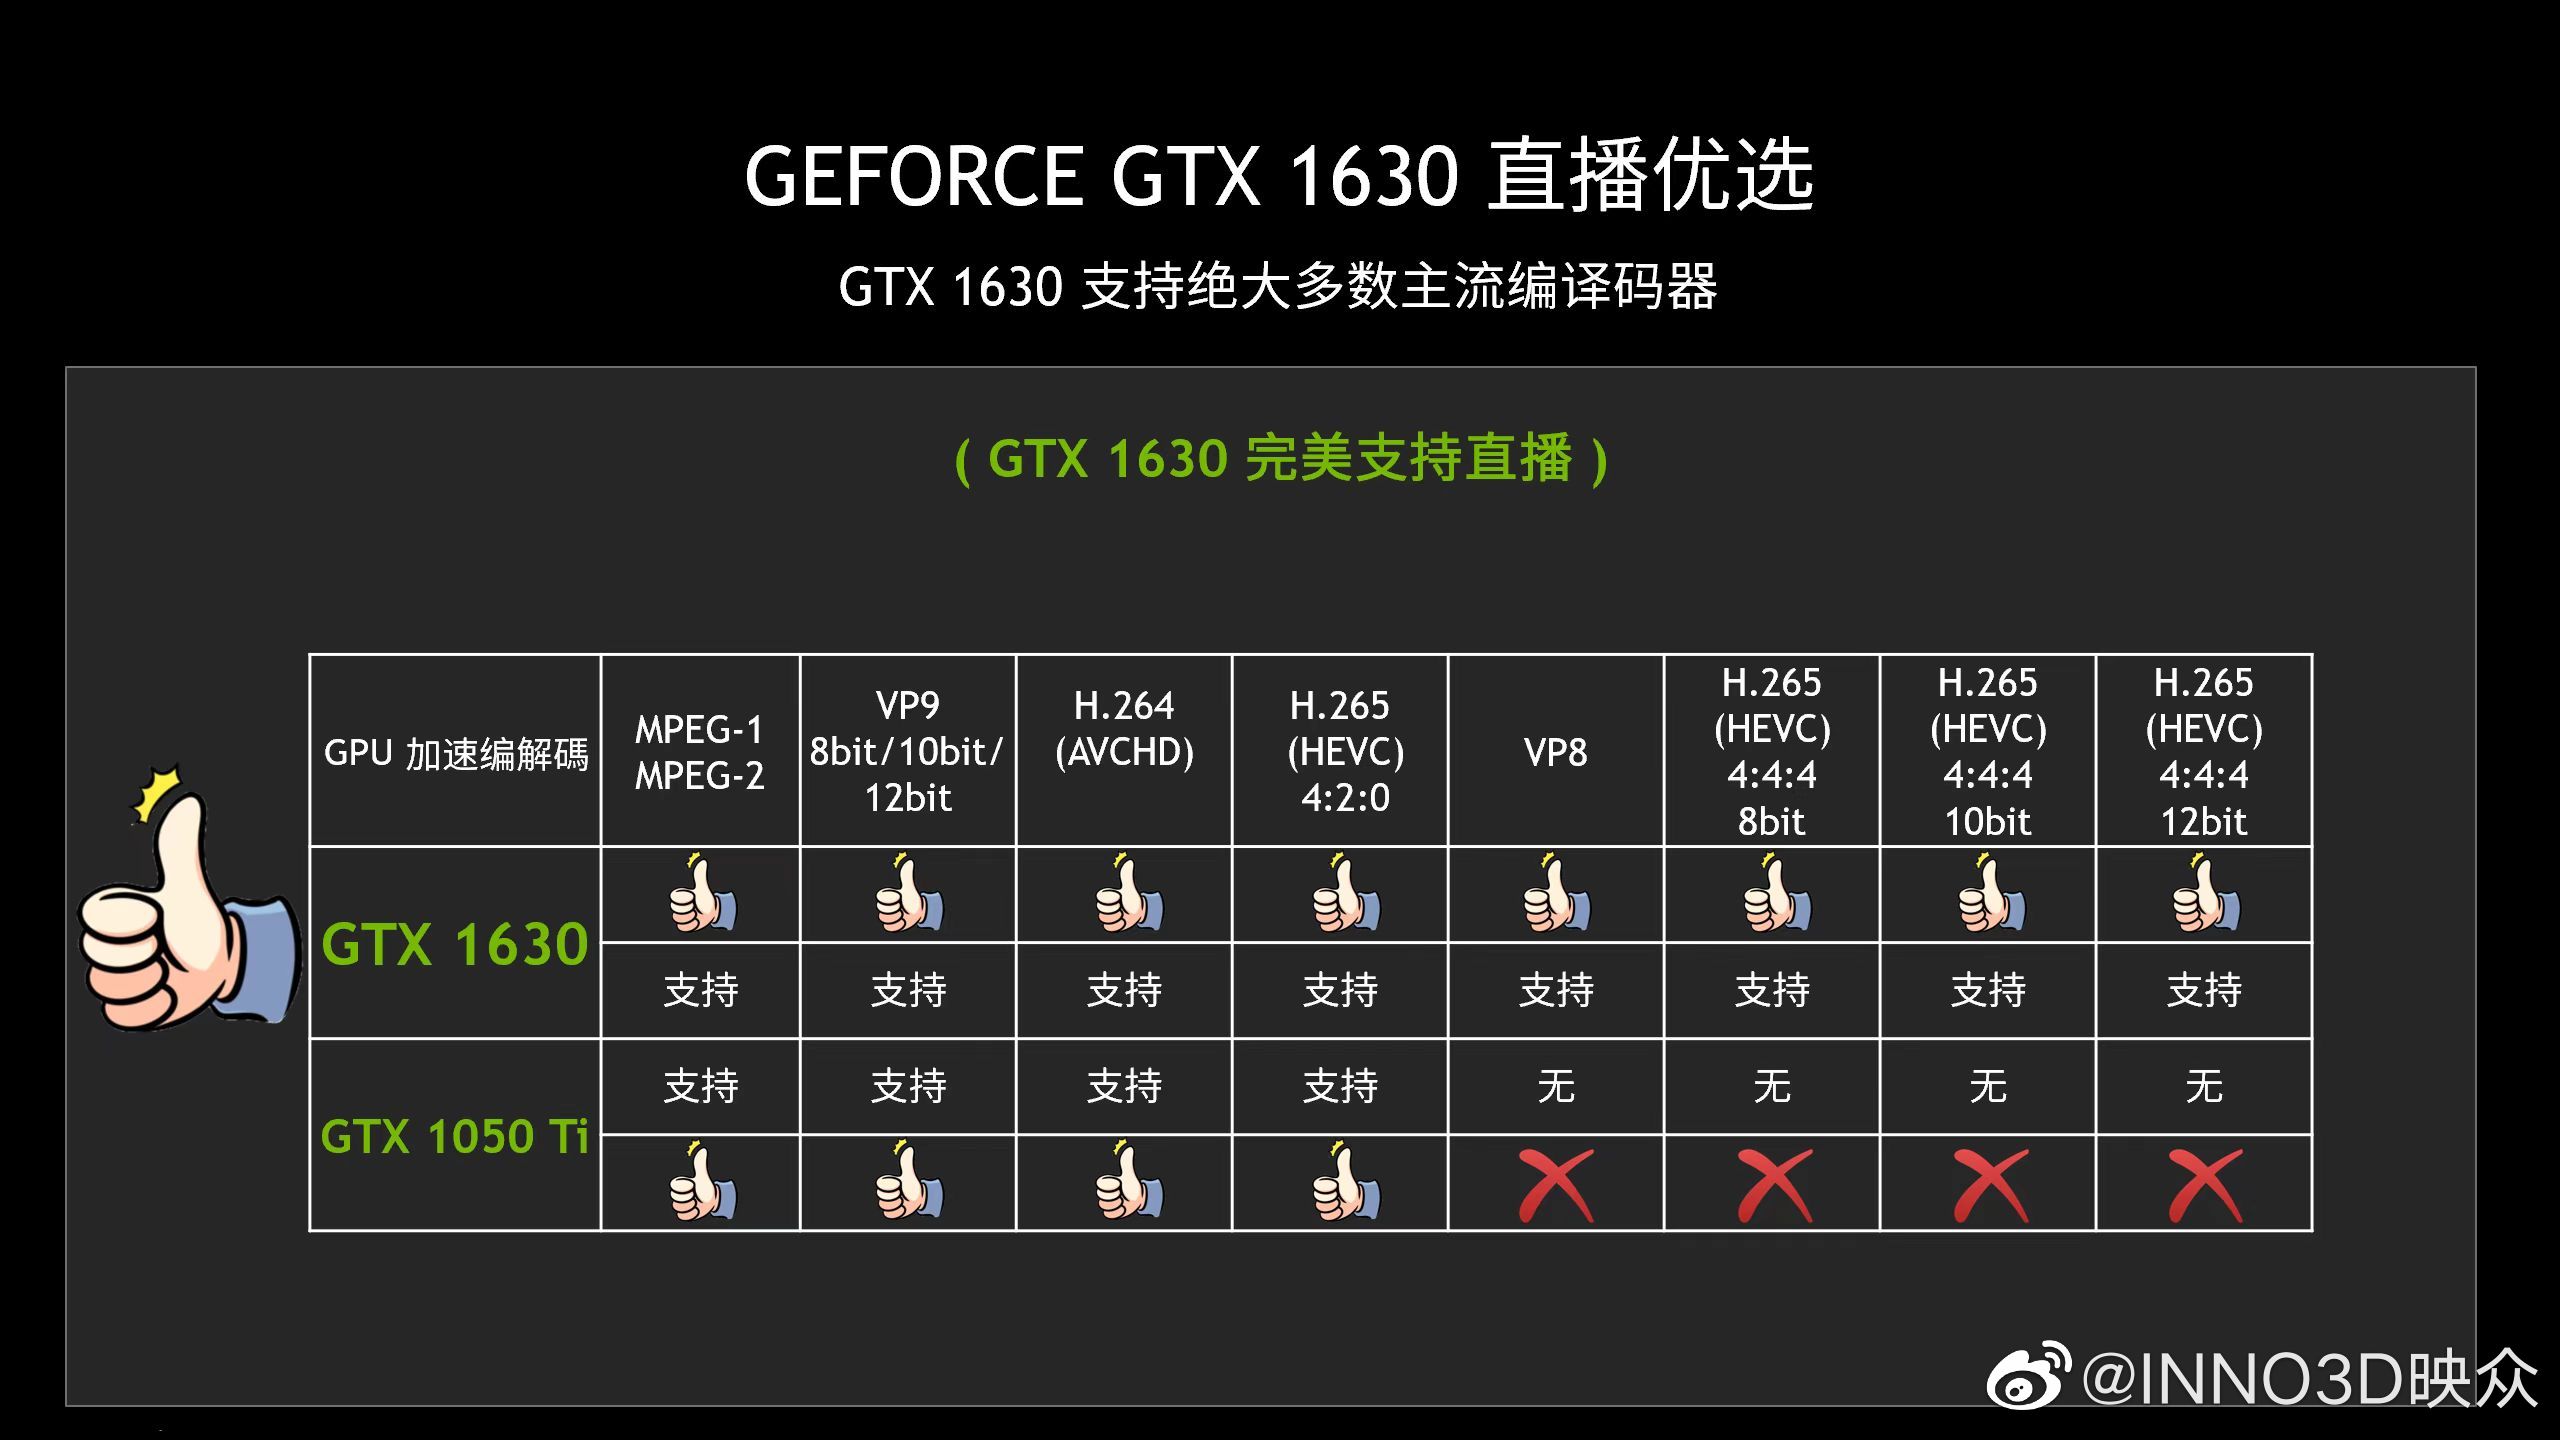 inno3d gtx 1630 2 GeForce GTX 1630 เปิดตัวที่ราคา 169ดอลล่าสหรัฐฯ ประสิทธิภาพใกล้เคียงกับ GTX 1050 Ti ที่วางจำหน่ายราคา 139ดอลล่าสหรับฯ ในปี 2016